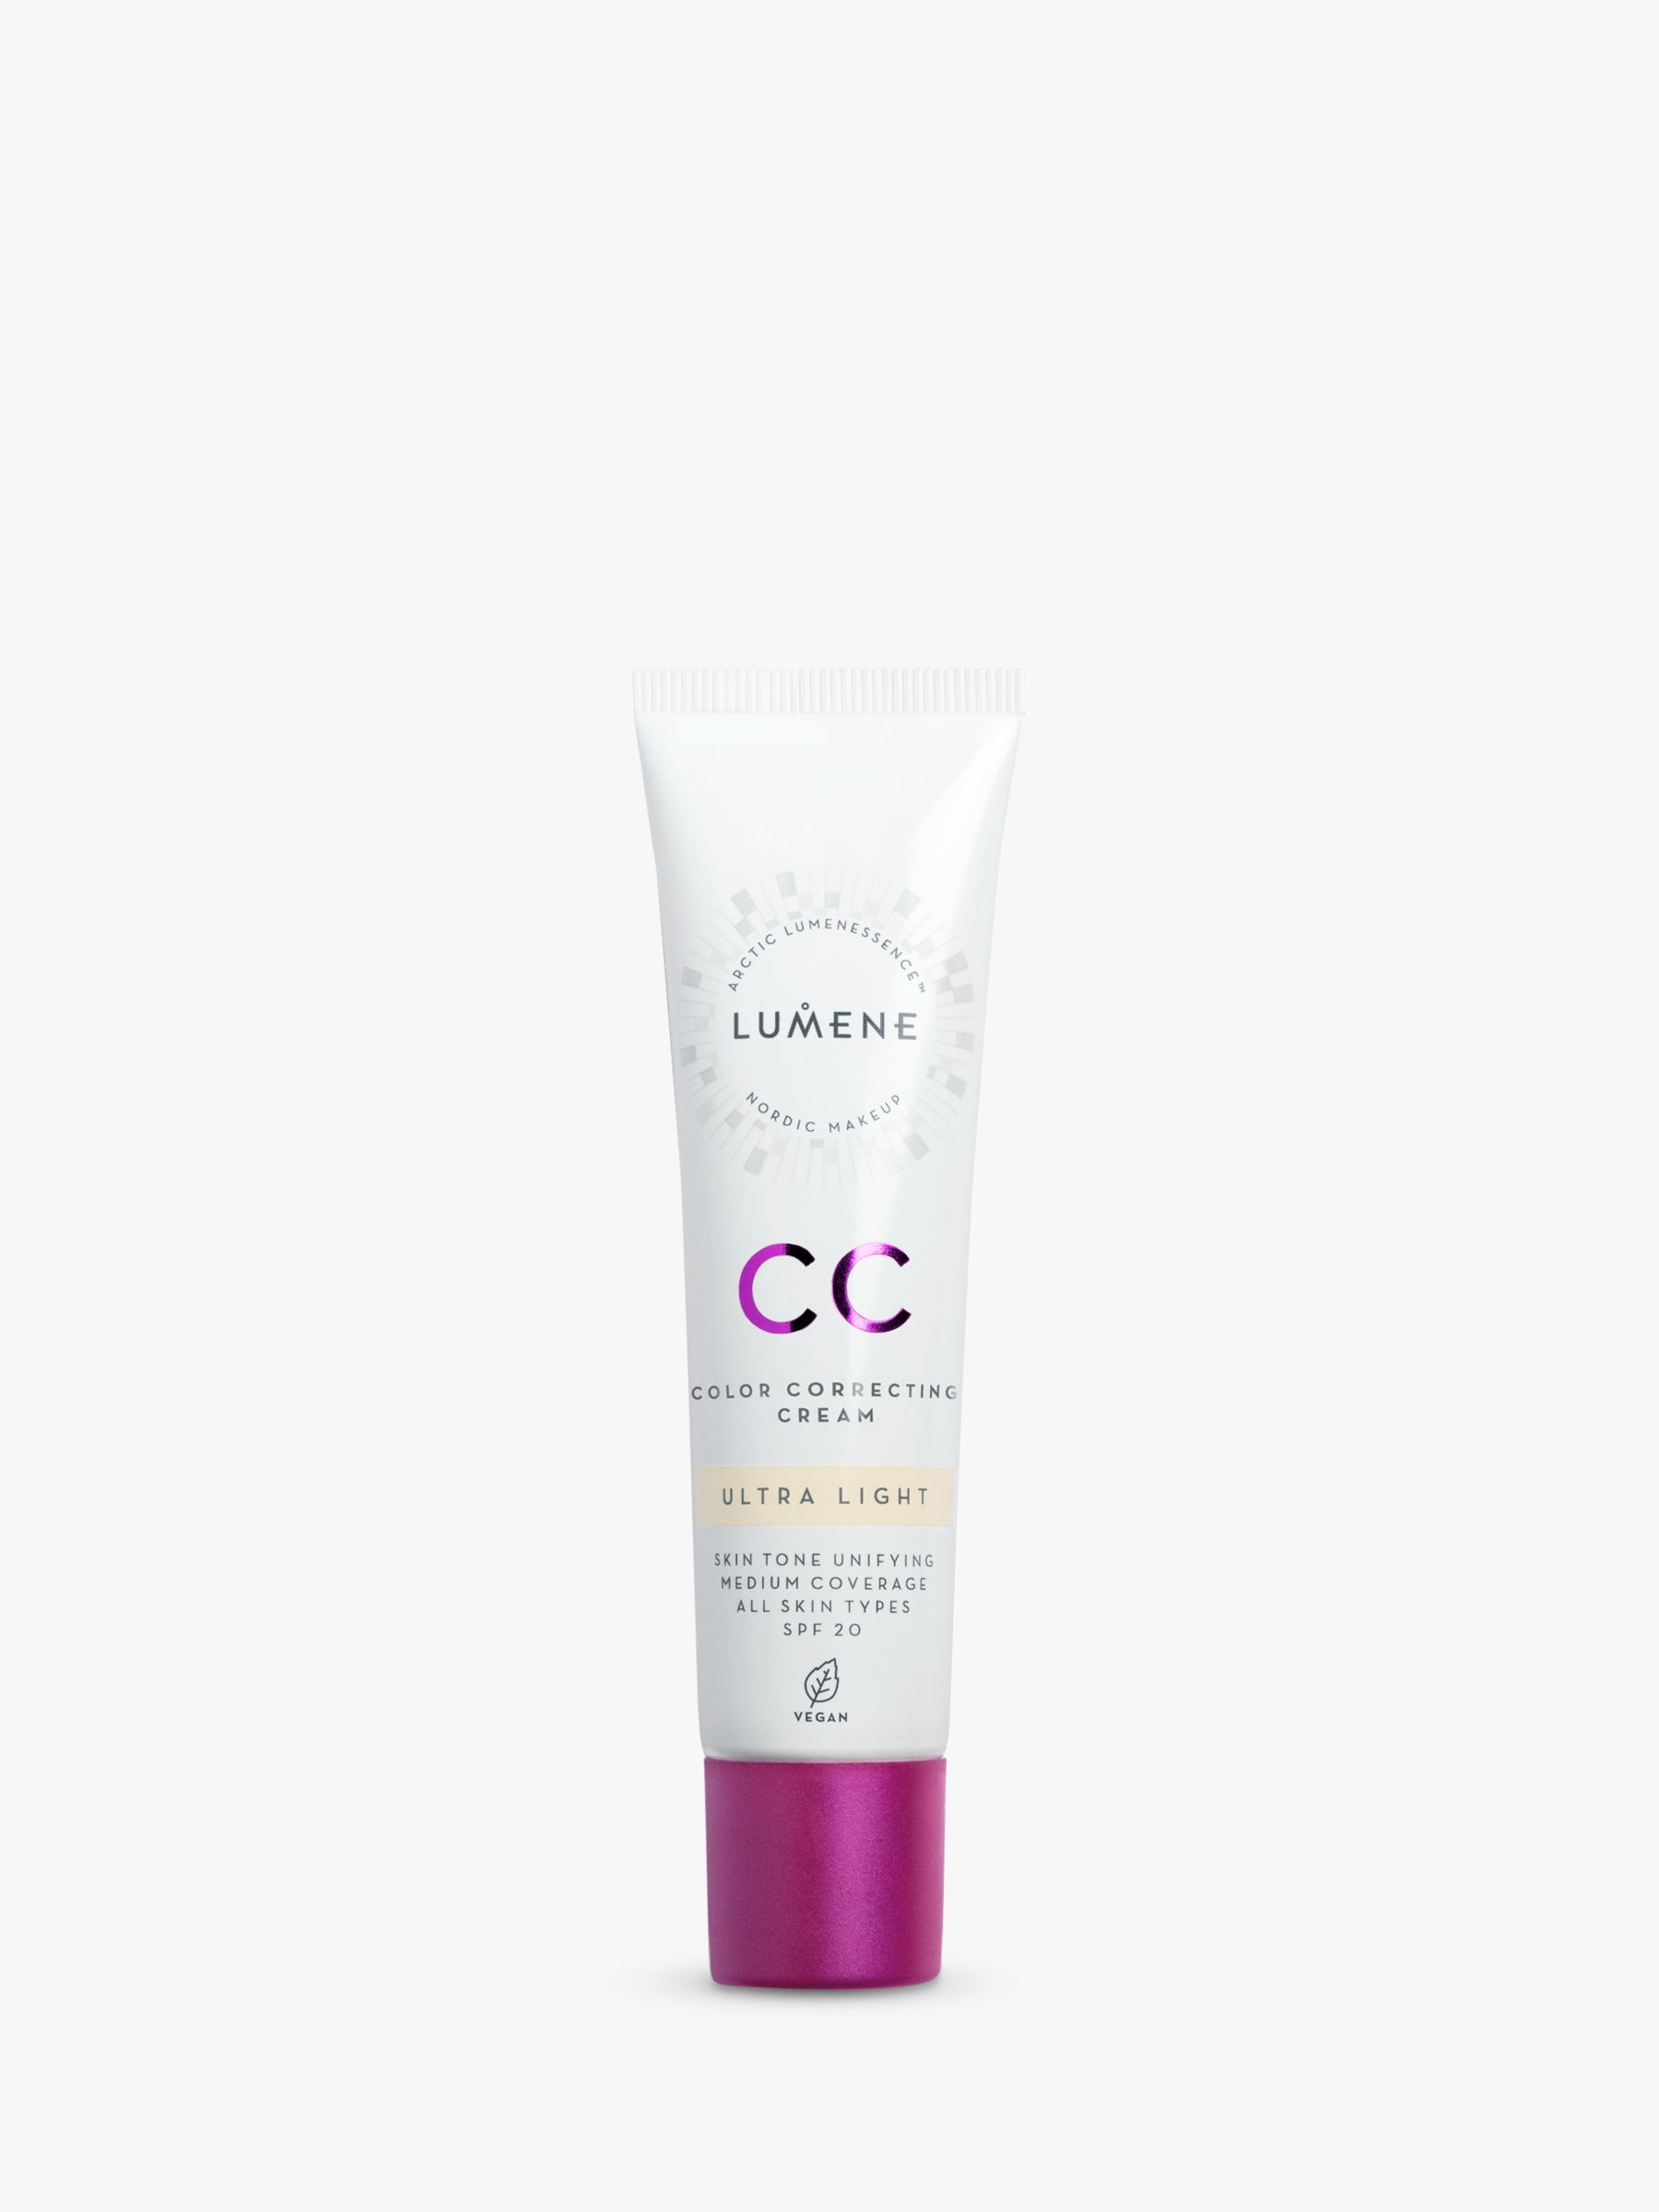 Lumene CC Colour Correcting Cream SPF 20, Ultra Light 1